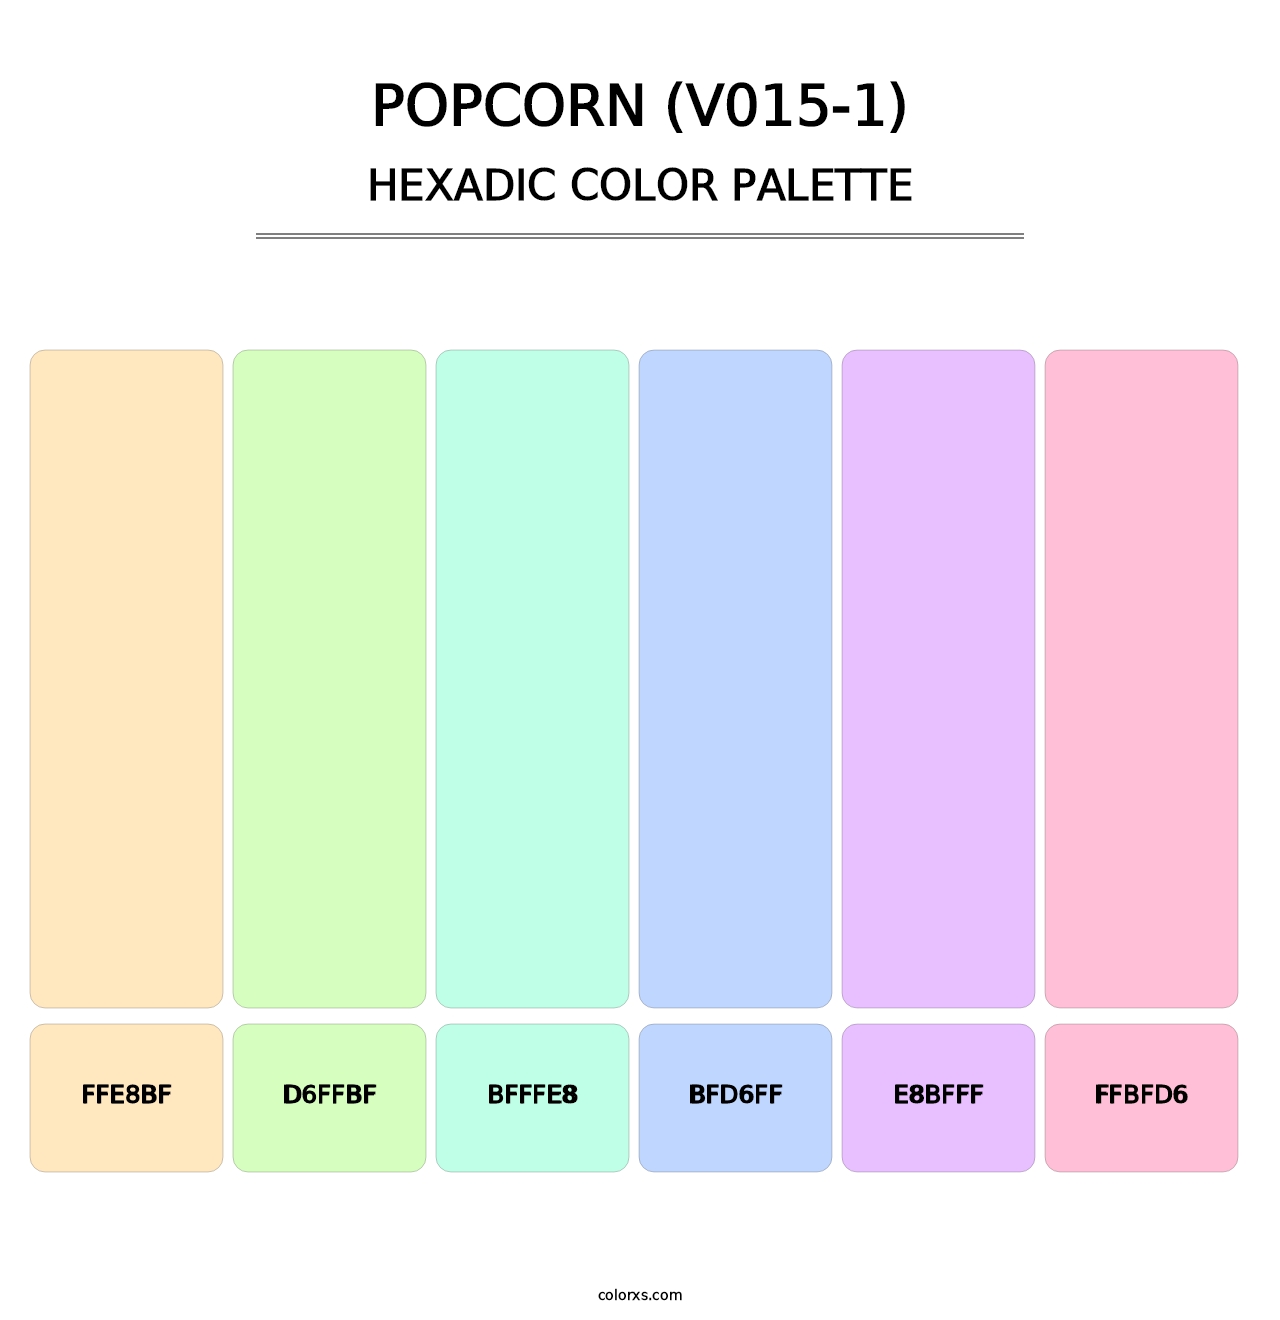 Popcorn (V015-1) - Hexadic Color Palette